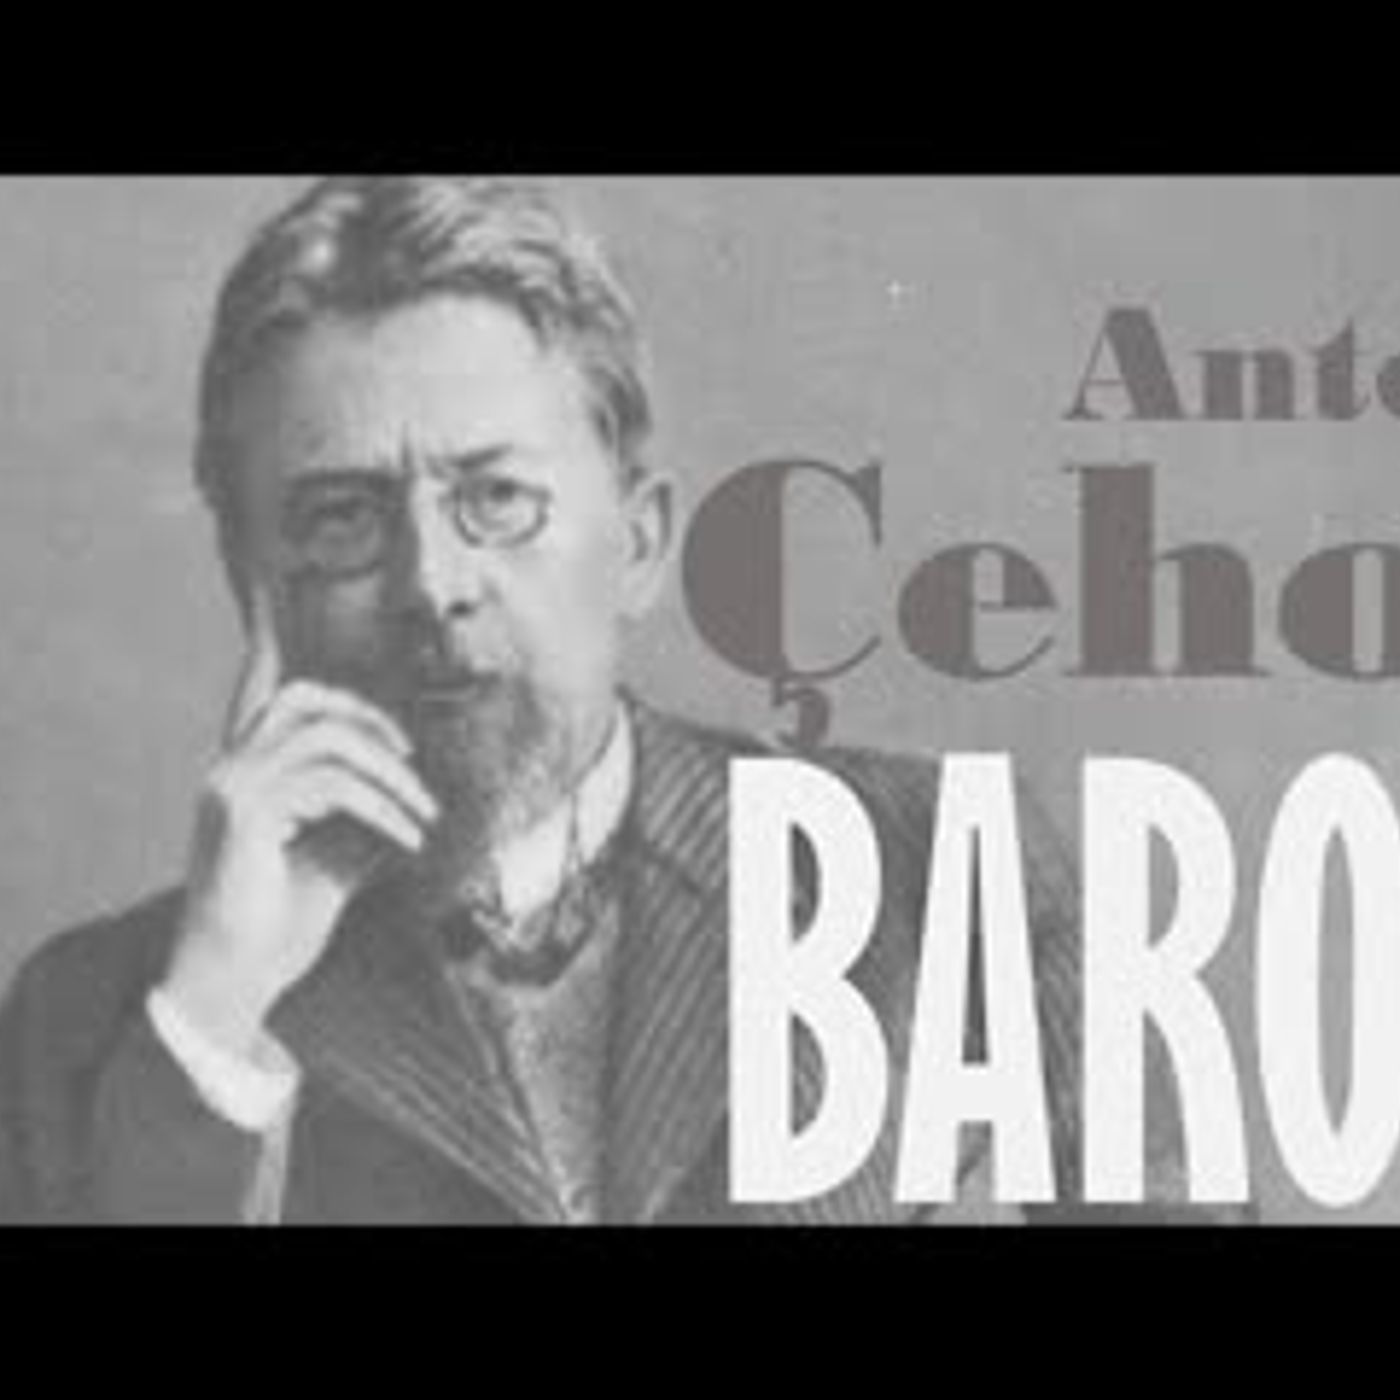 BARON - Anton ÇEHOV sesli öykü tek parça